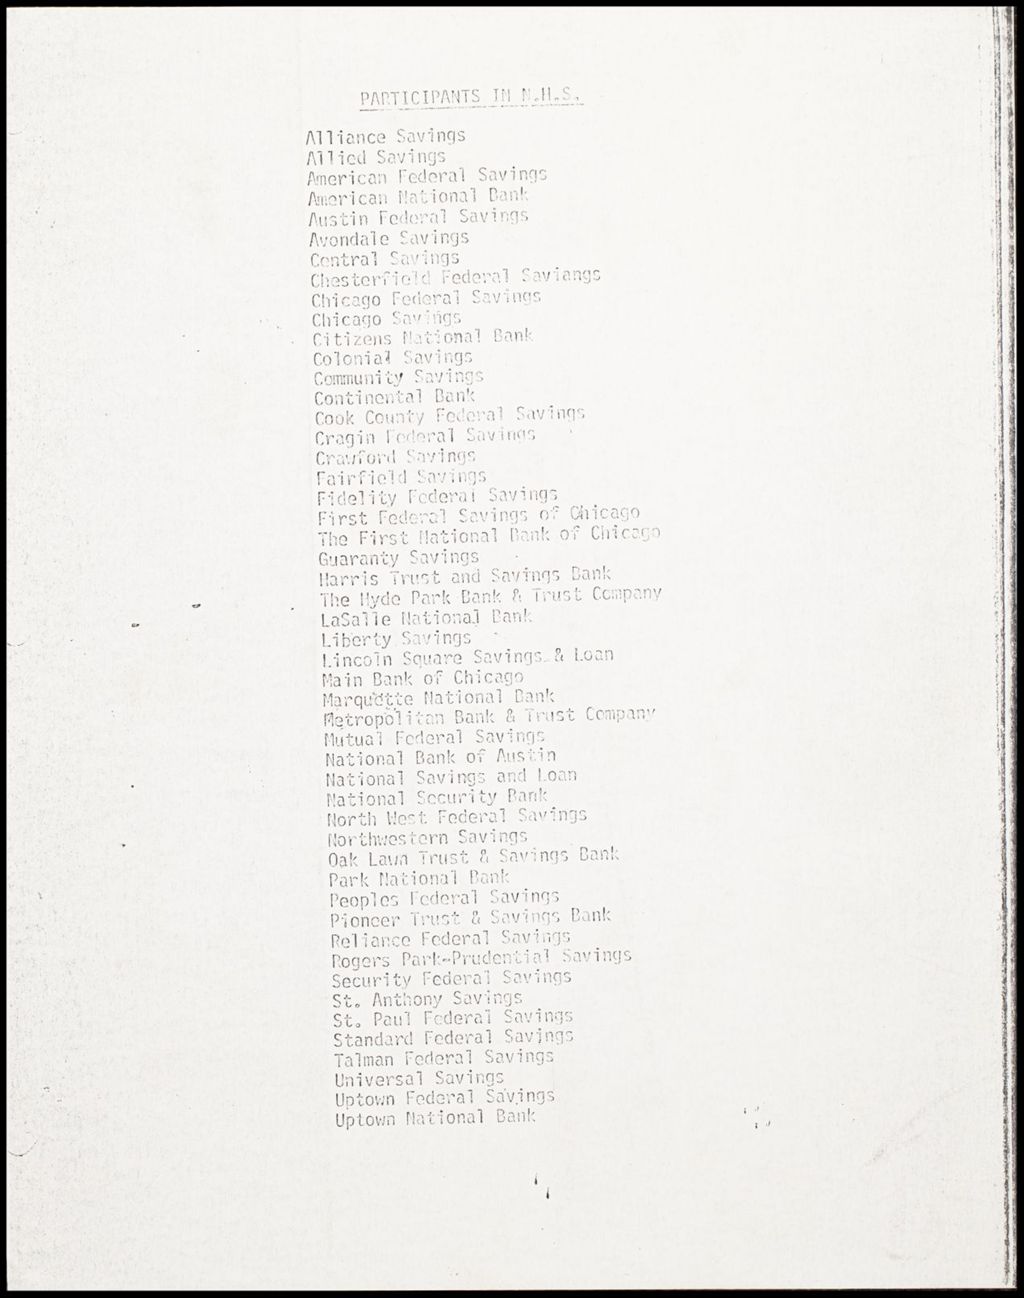 Task Force on Racial Problems, 1976 (Folder II-2263)